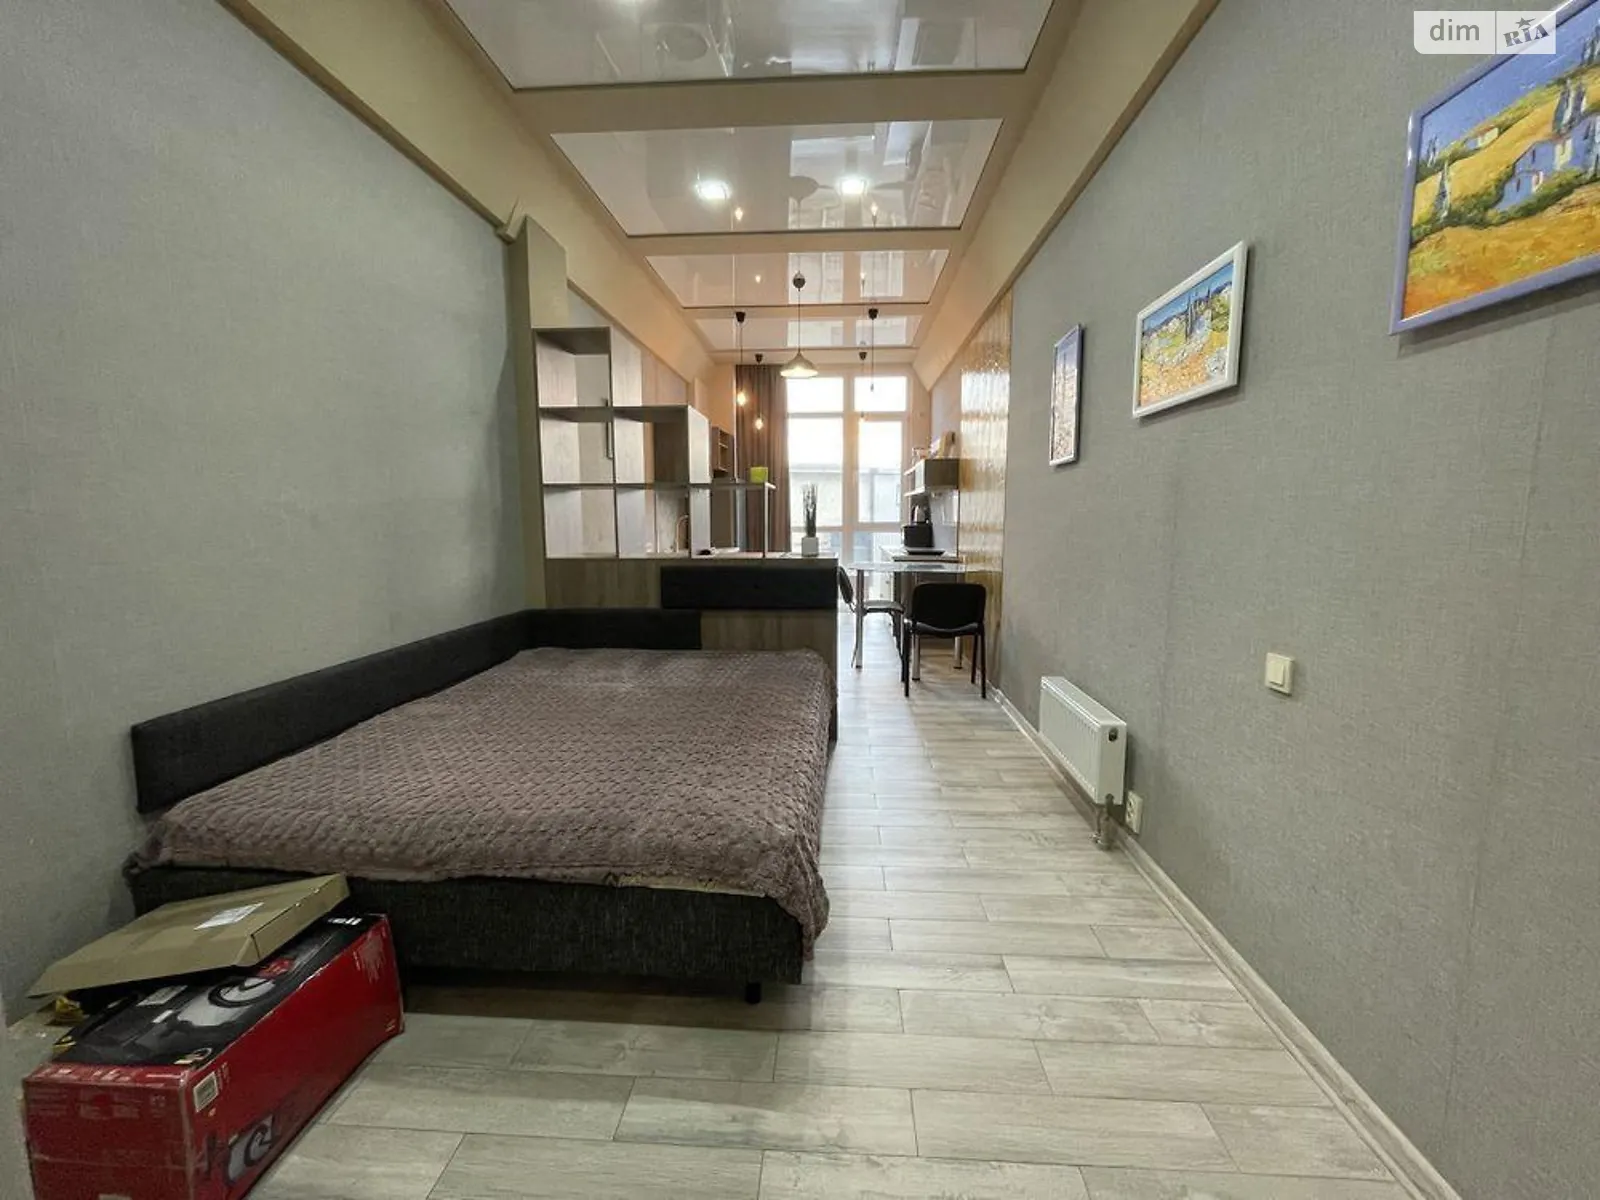 Продается комната 35 кв. м в Харькове - фото 2